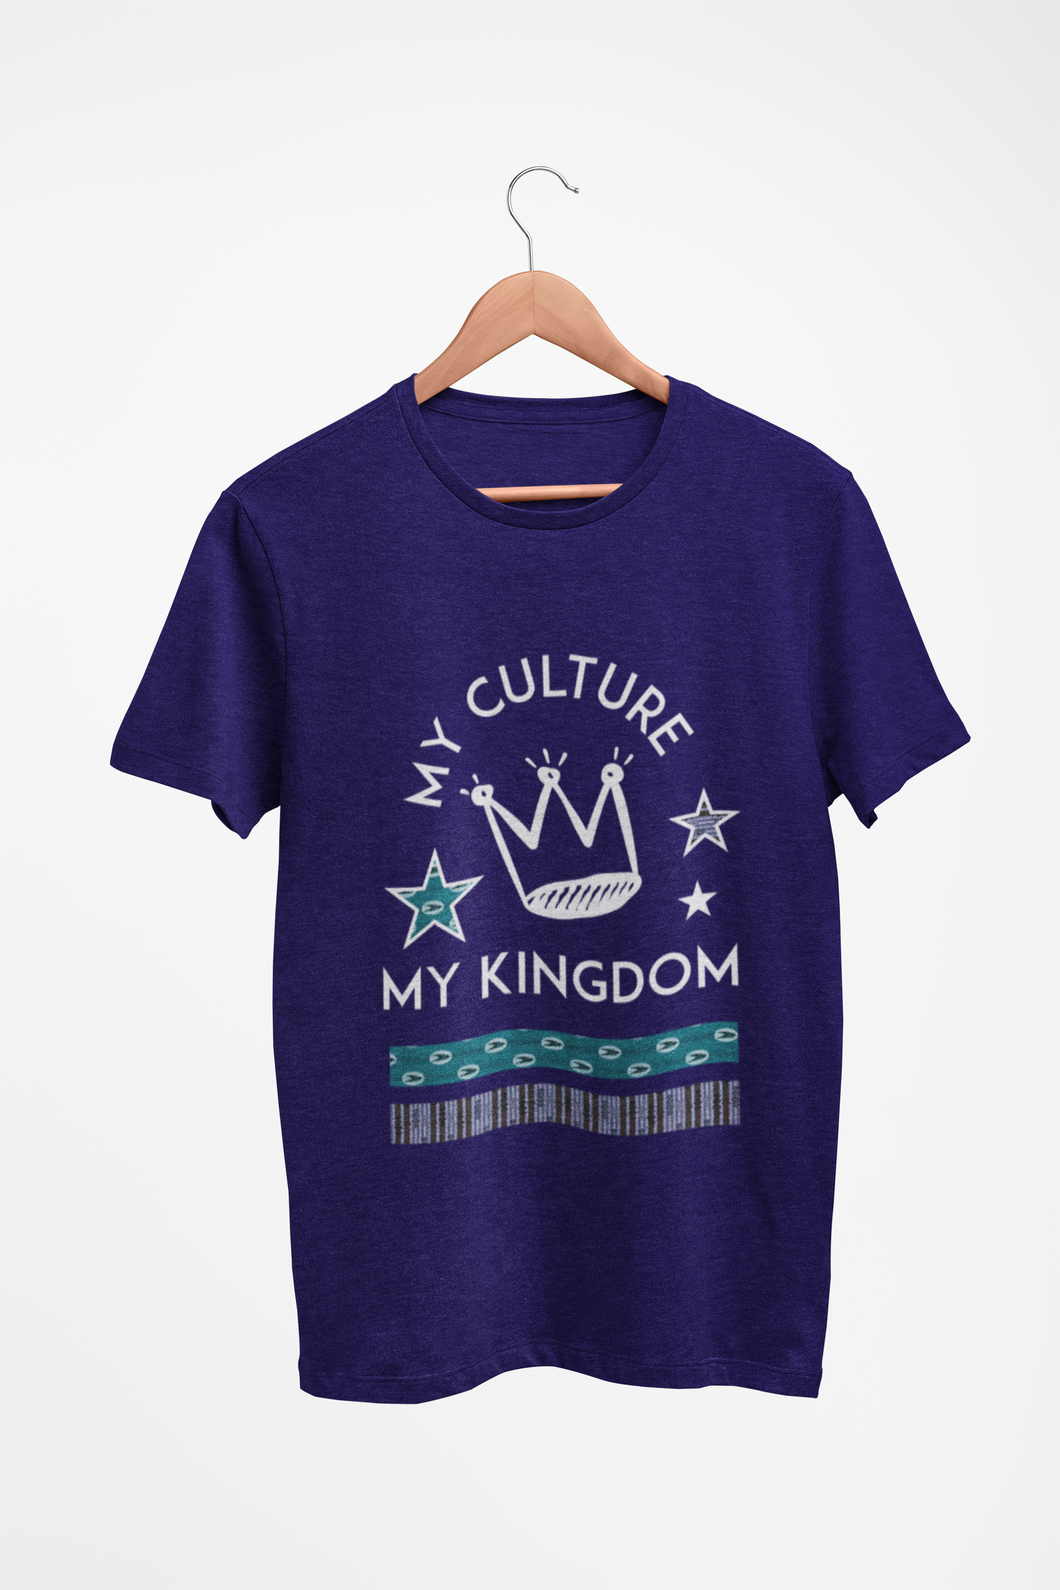 My Culture My Kingdom